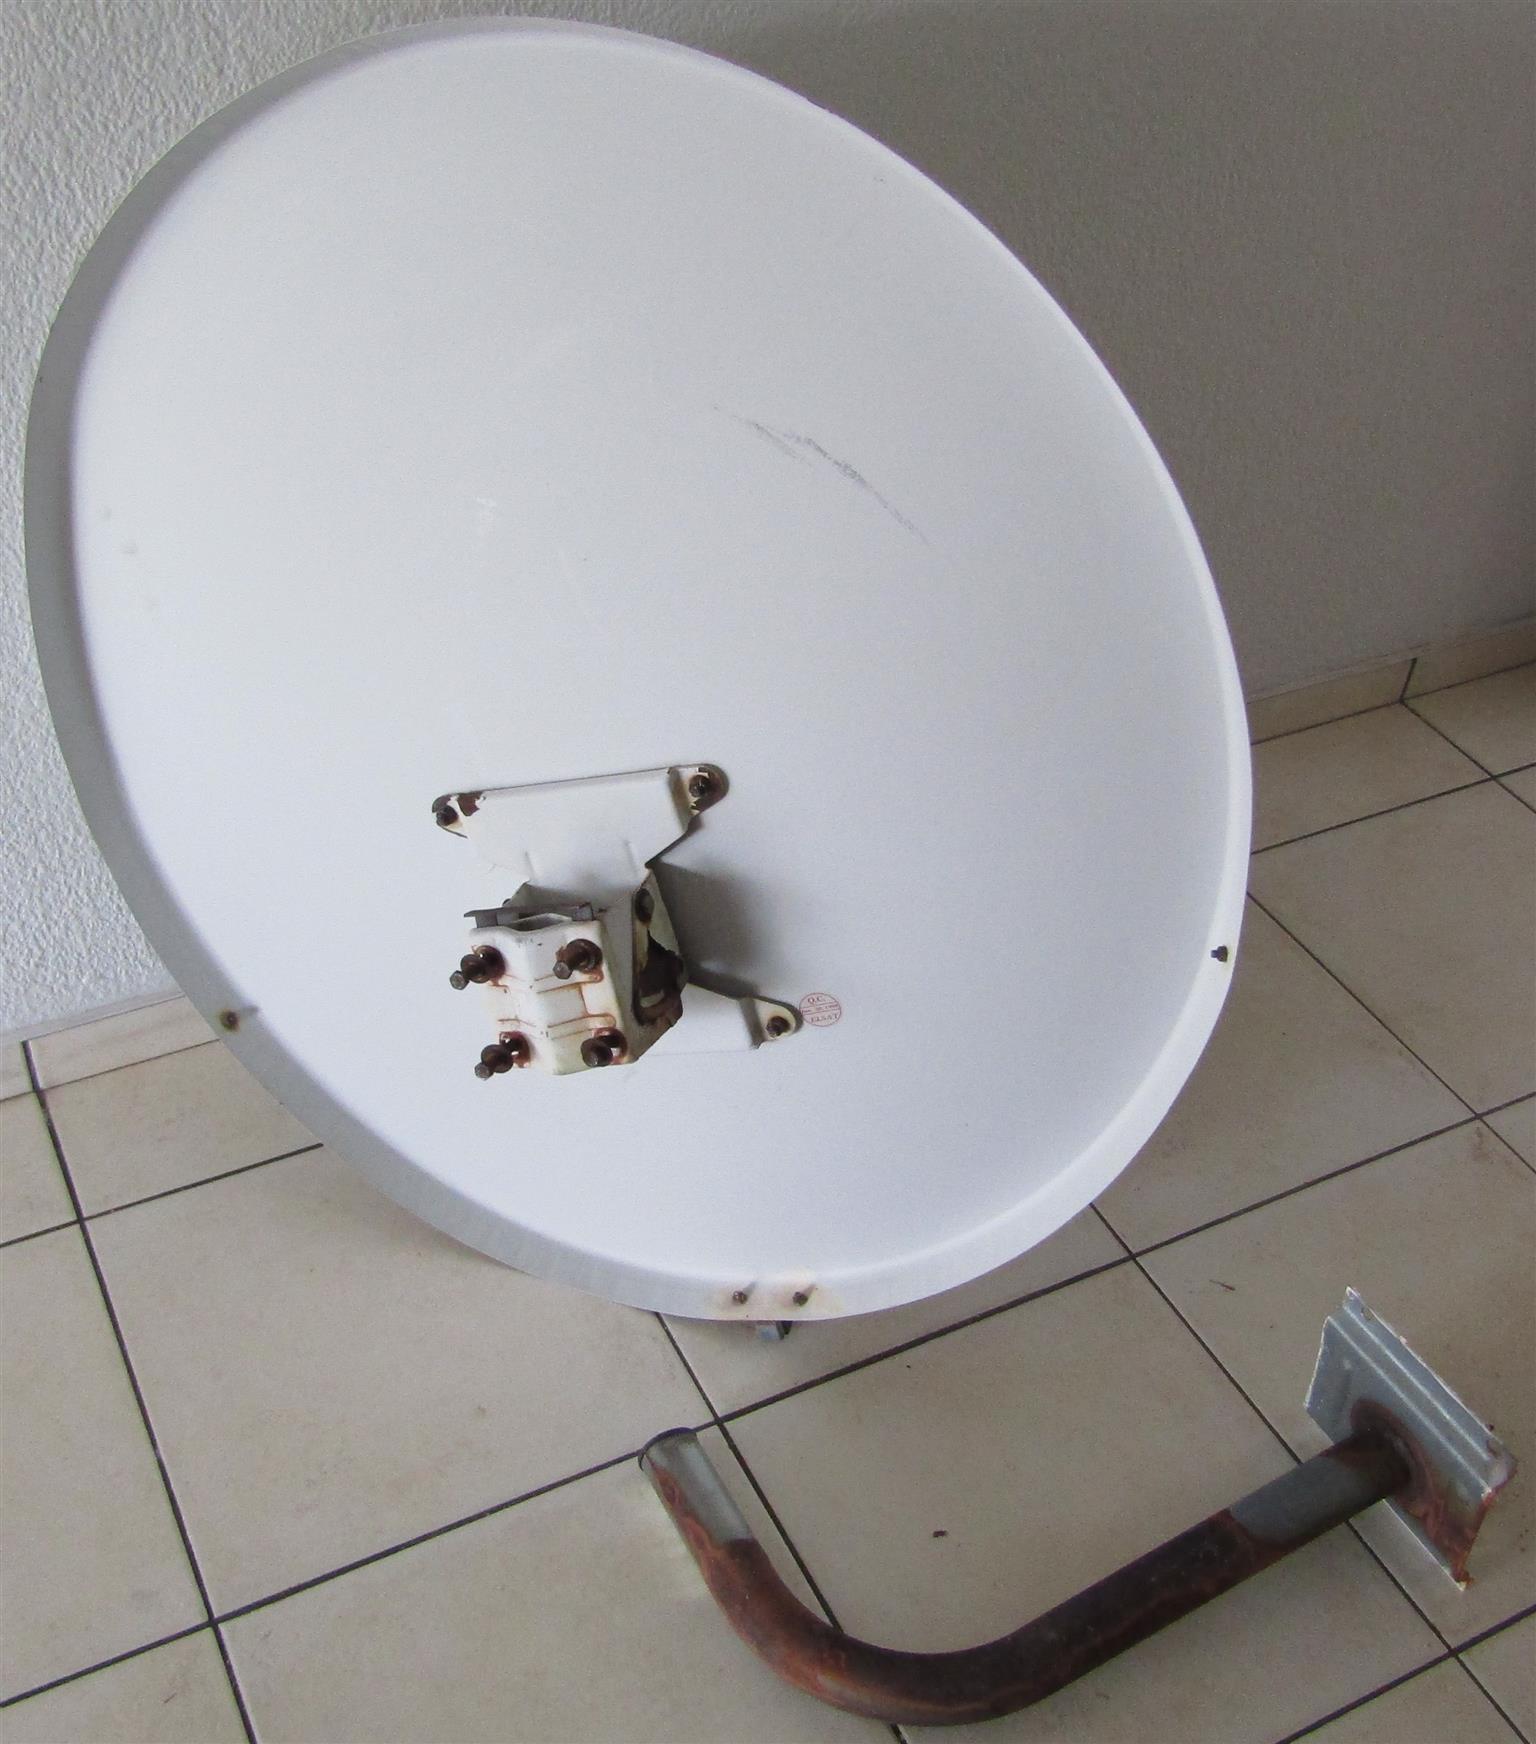 91cm Satellite Dish with Mounting Bracket - used